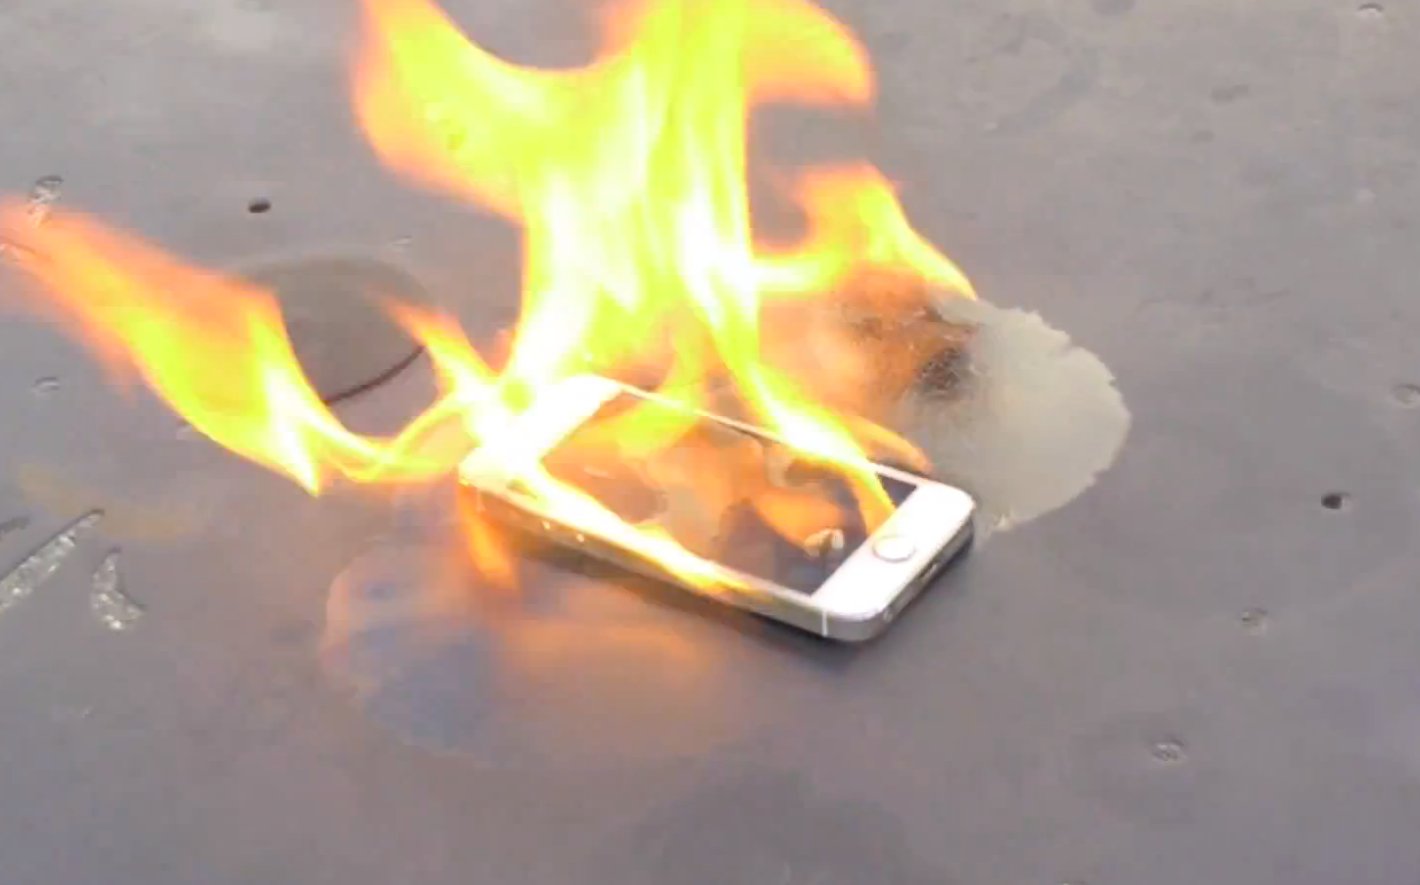 iPad Air Explosion im Vodafone Shop, brennendes iPhone 5s gold im Video! 9